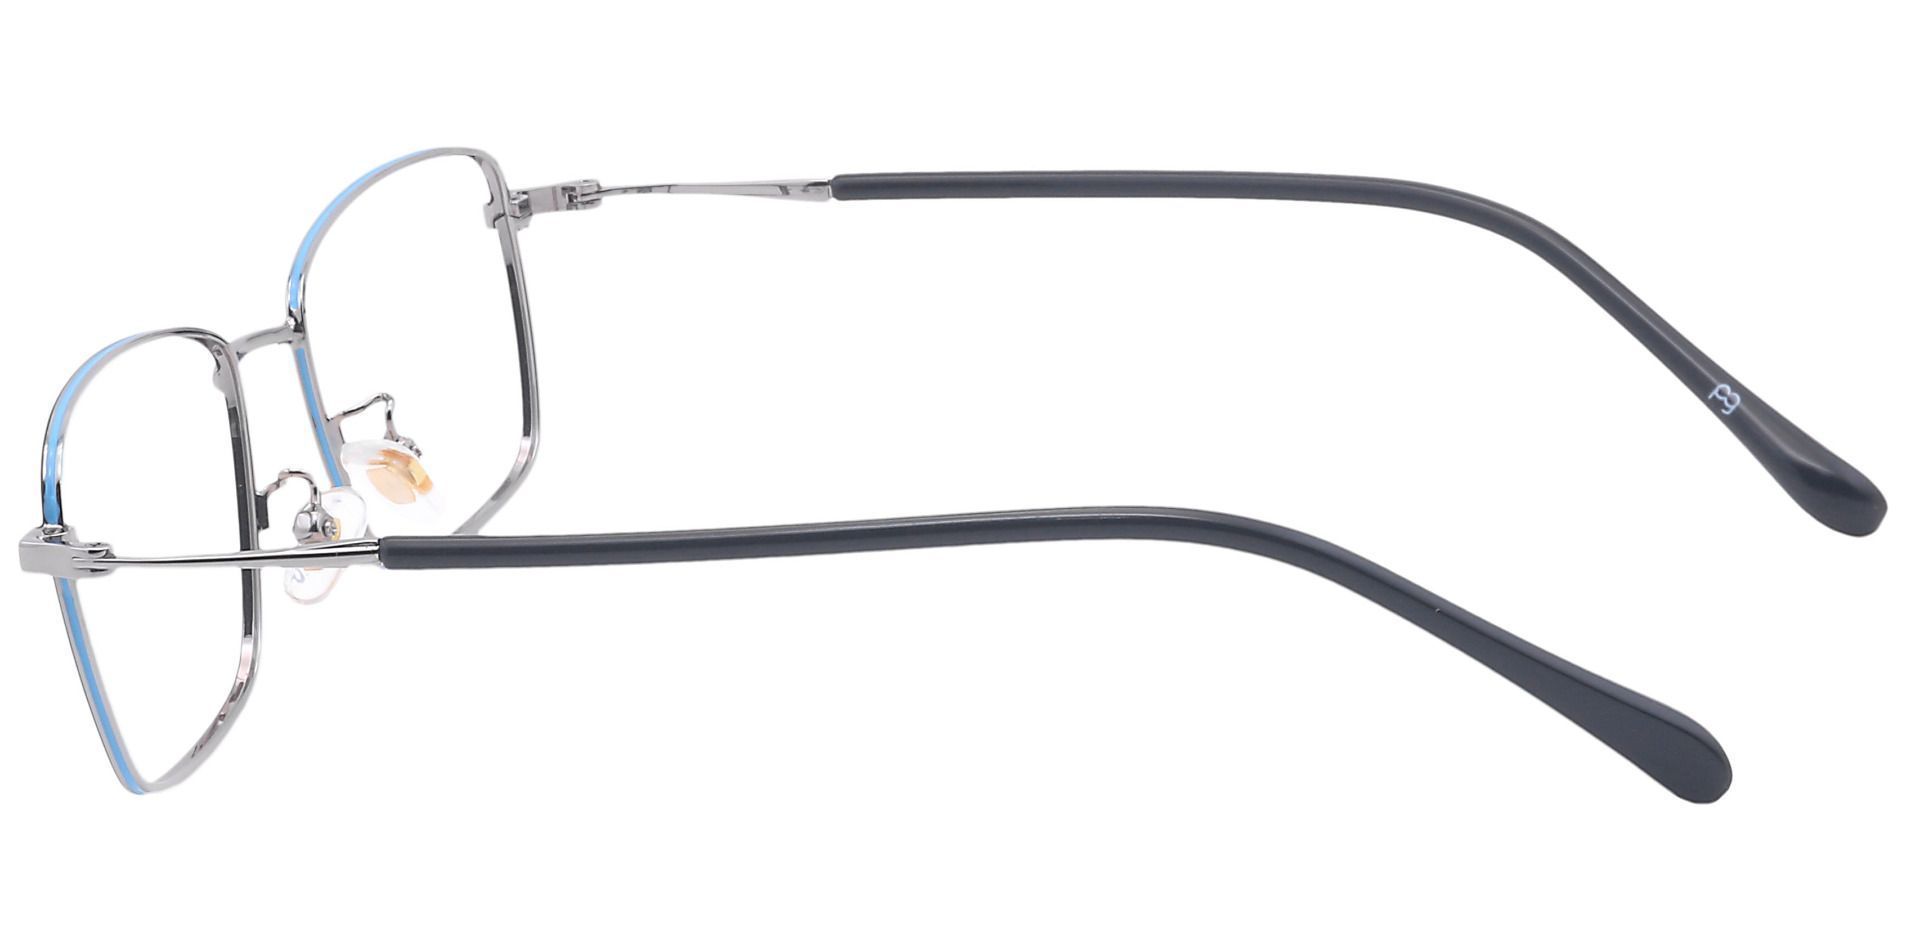 Diaz Rectangle Non-Rx Glasses - Clear